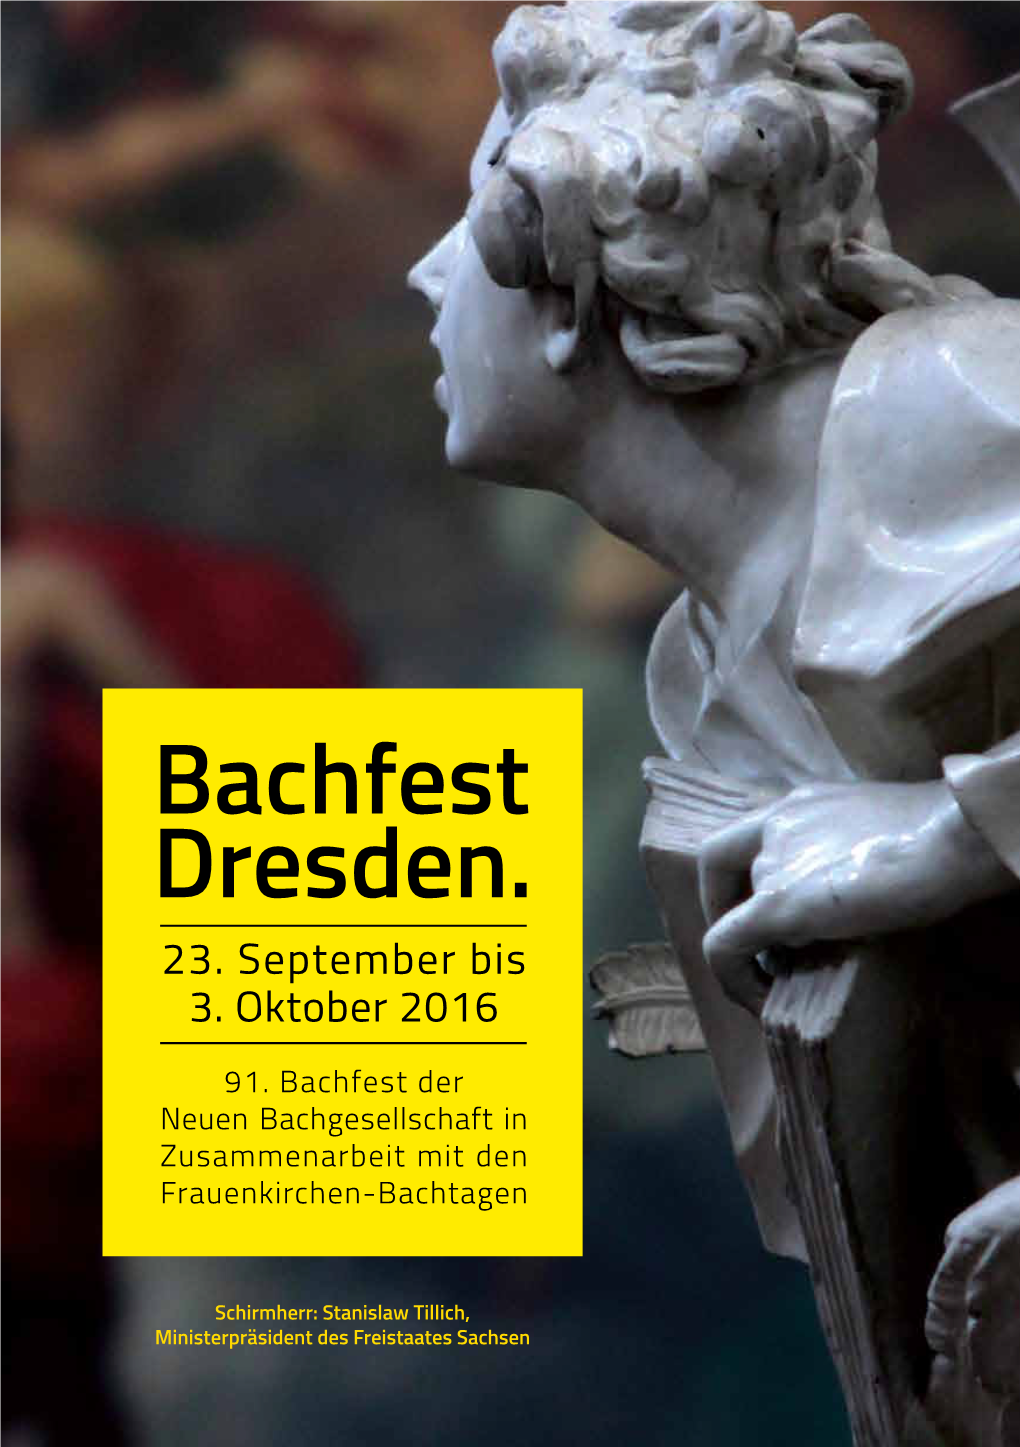 Bachfest Dresden. 23